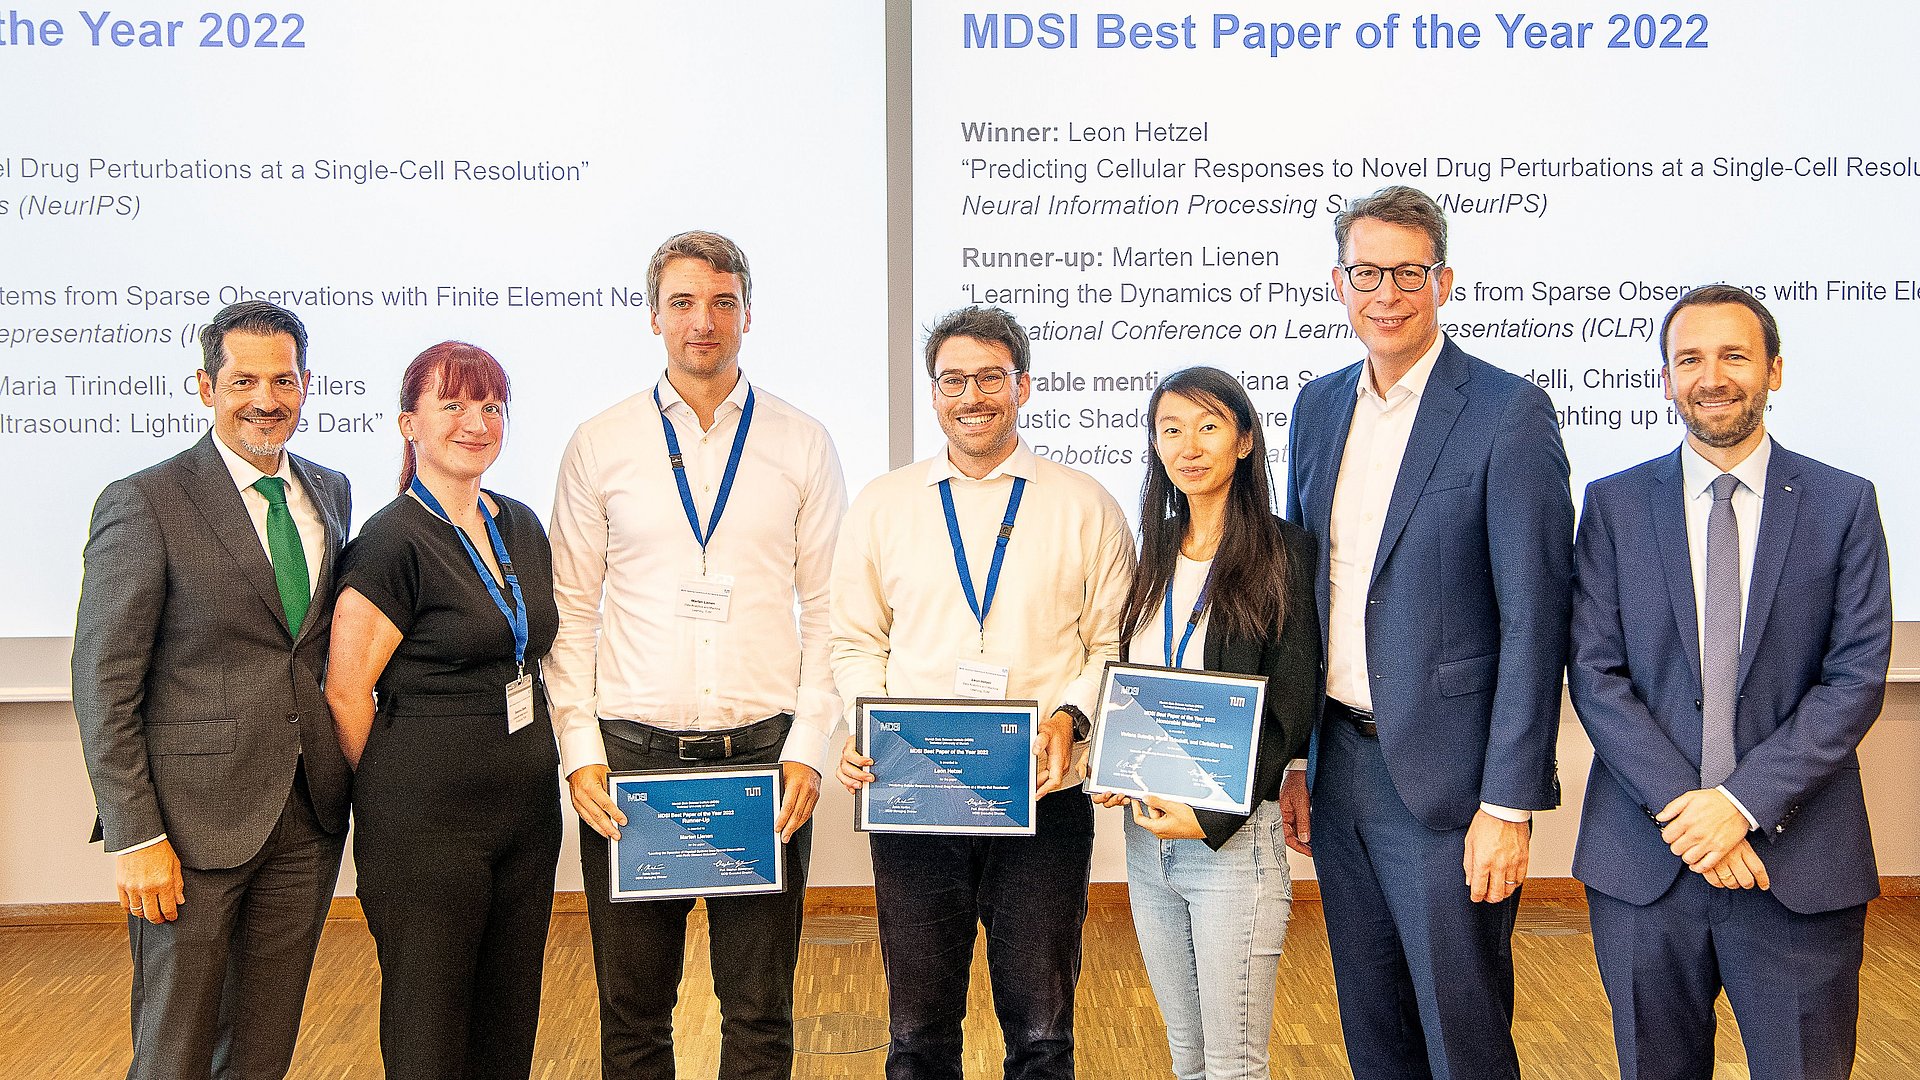 Verleihung des MDSI Best Paper Awards